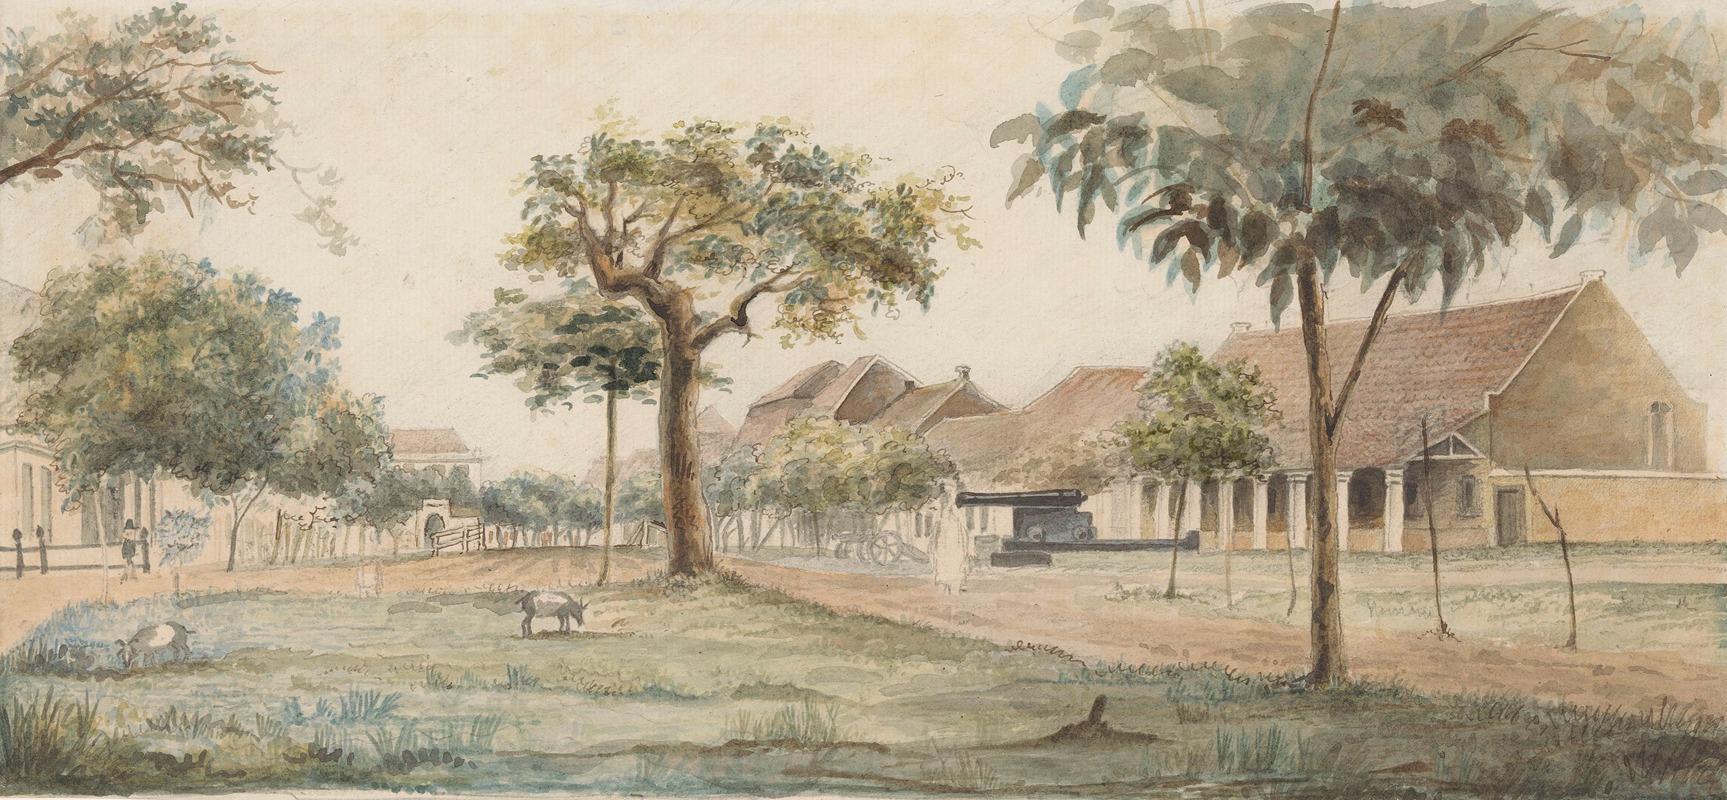 J. G. van der Does - Gezicht op een Nederlandse nederzetting in Indonesië, J. G. van der Does